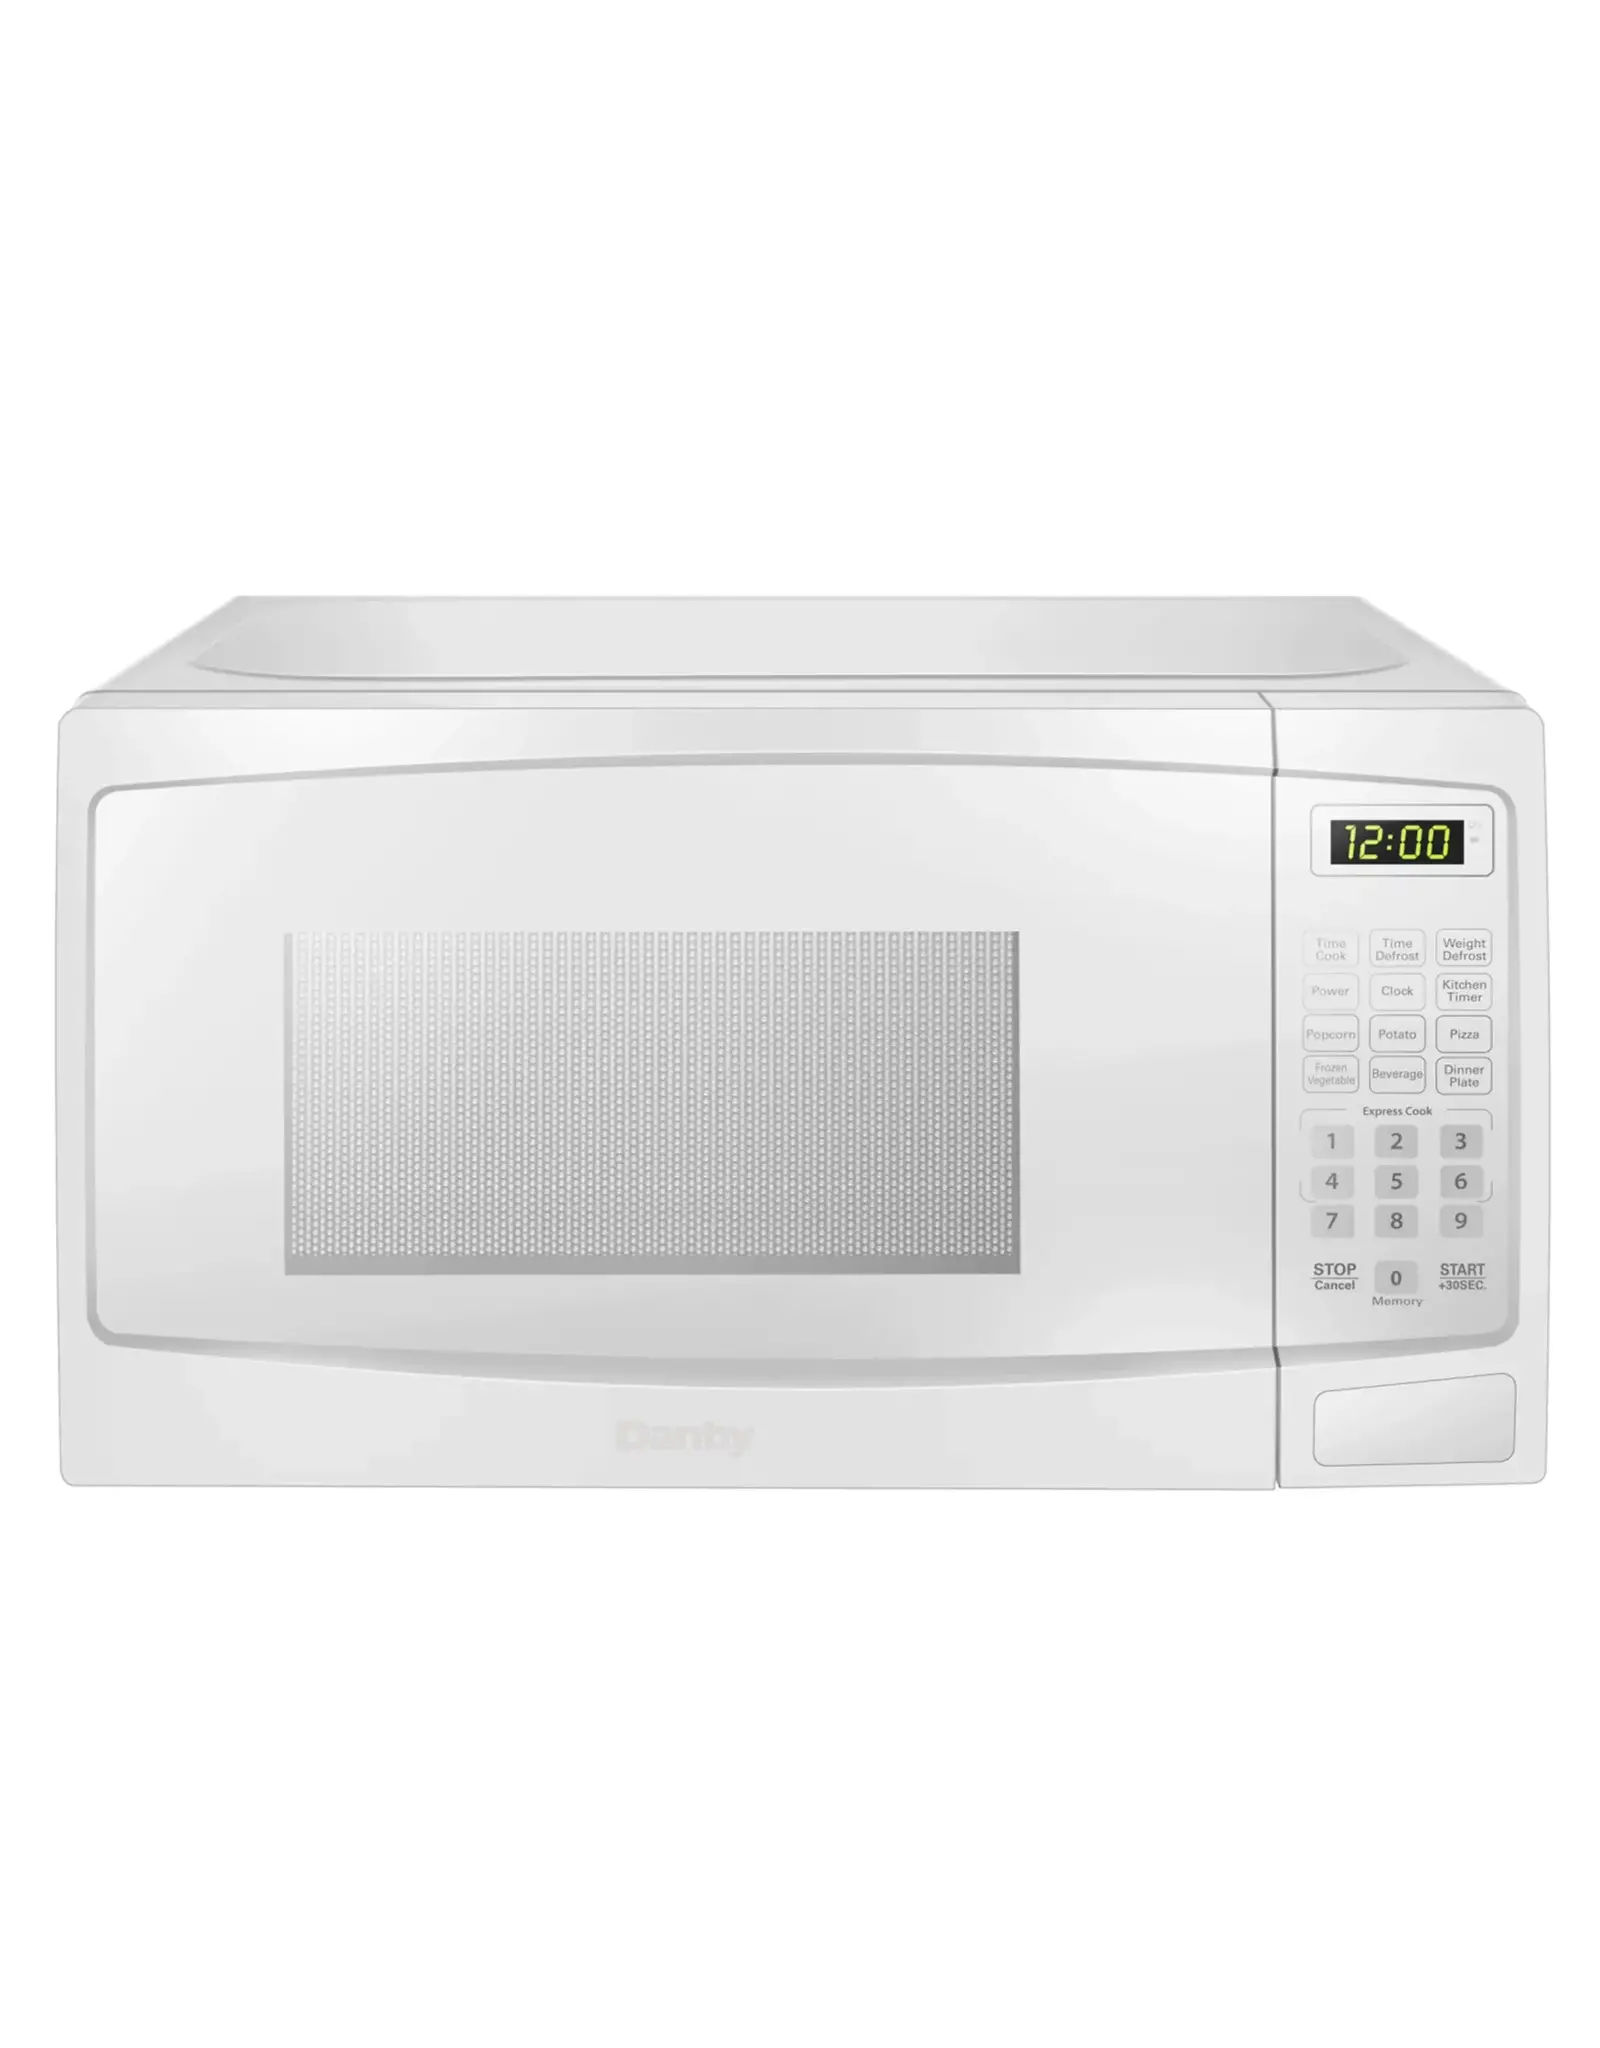 DANBY DBMW0920BWW 0.9 cu. ft. Countertop Microwave in White